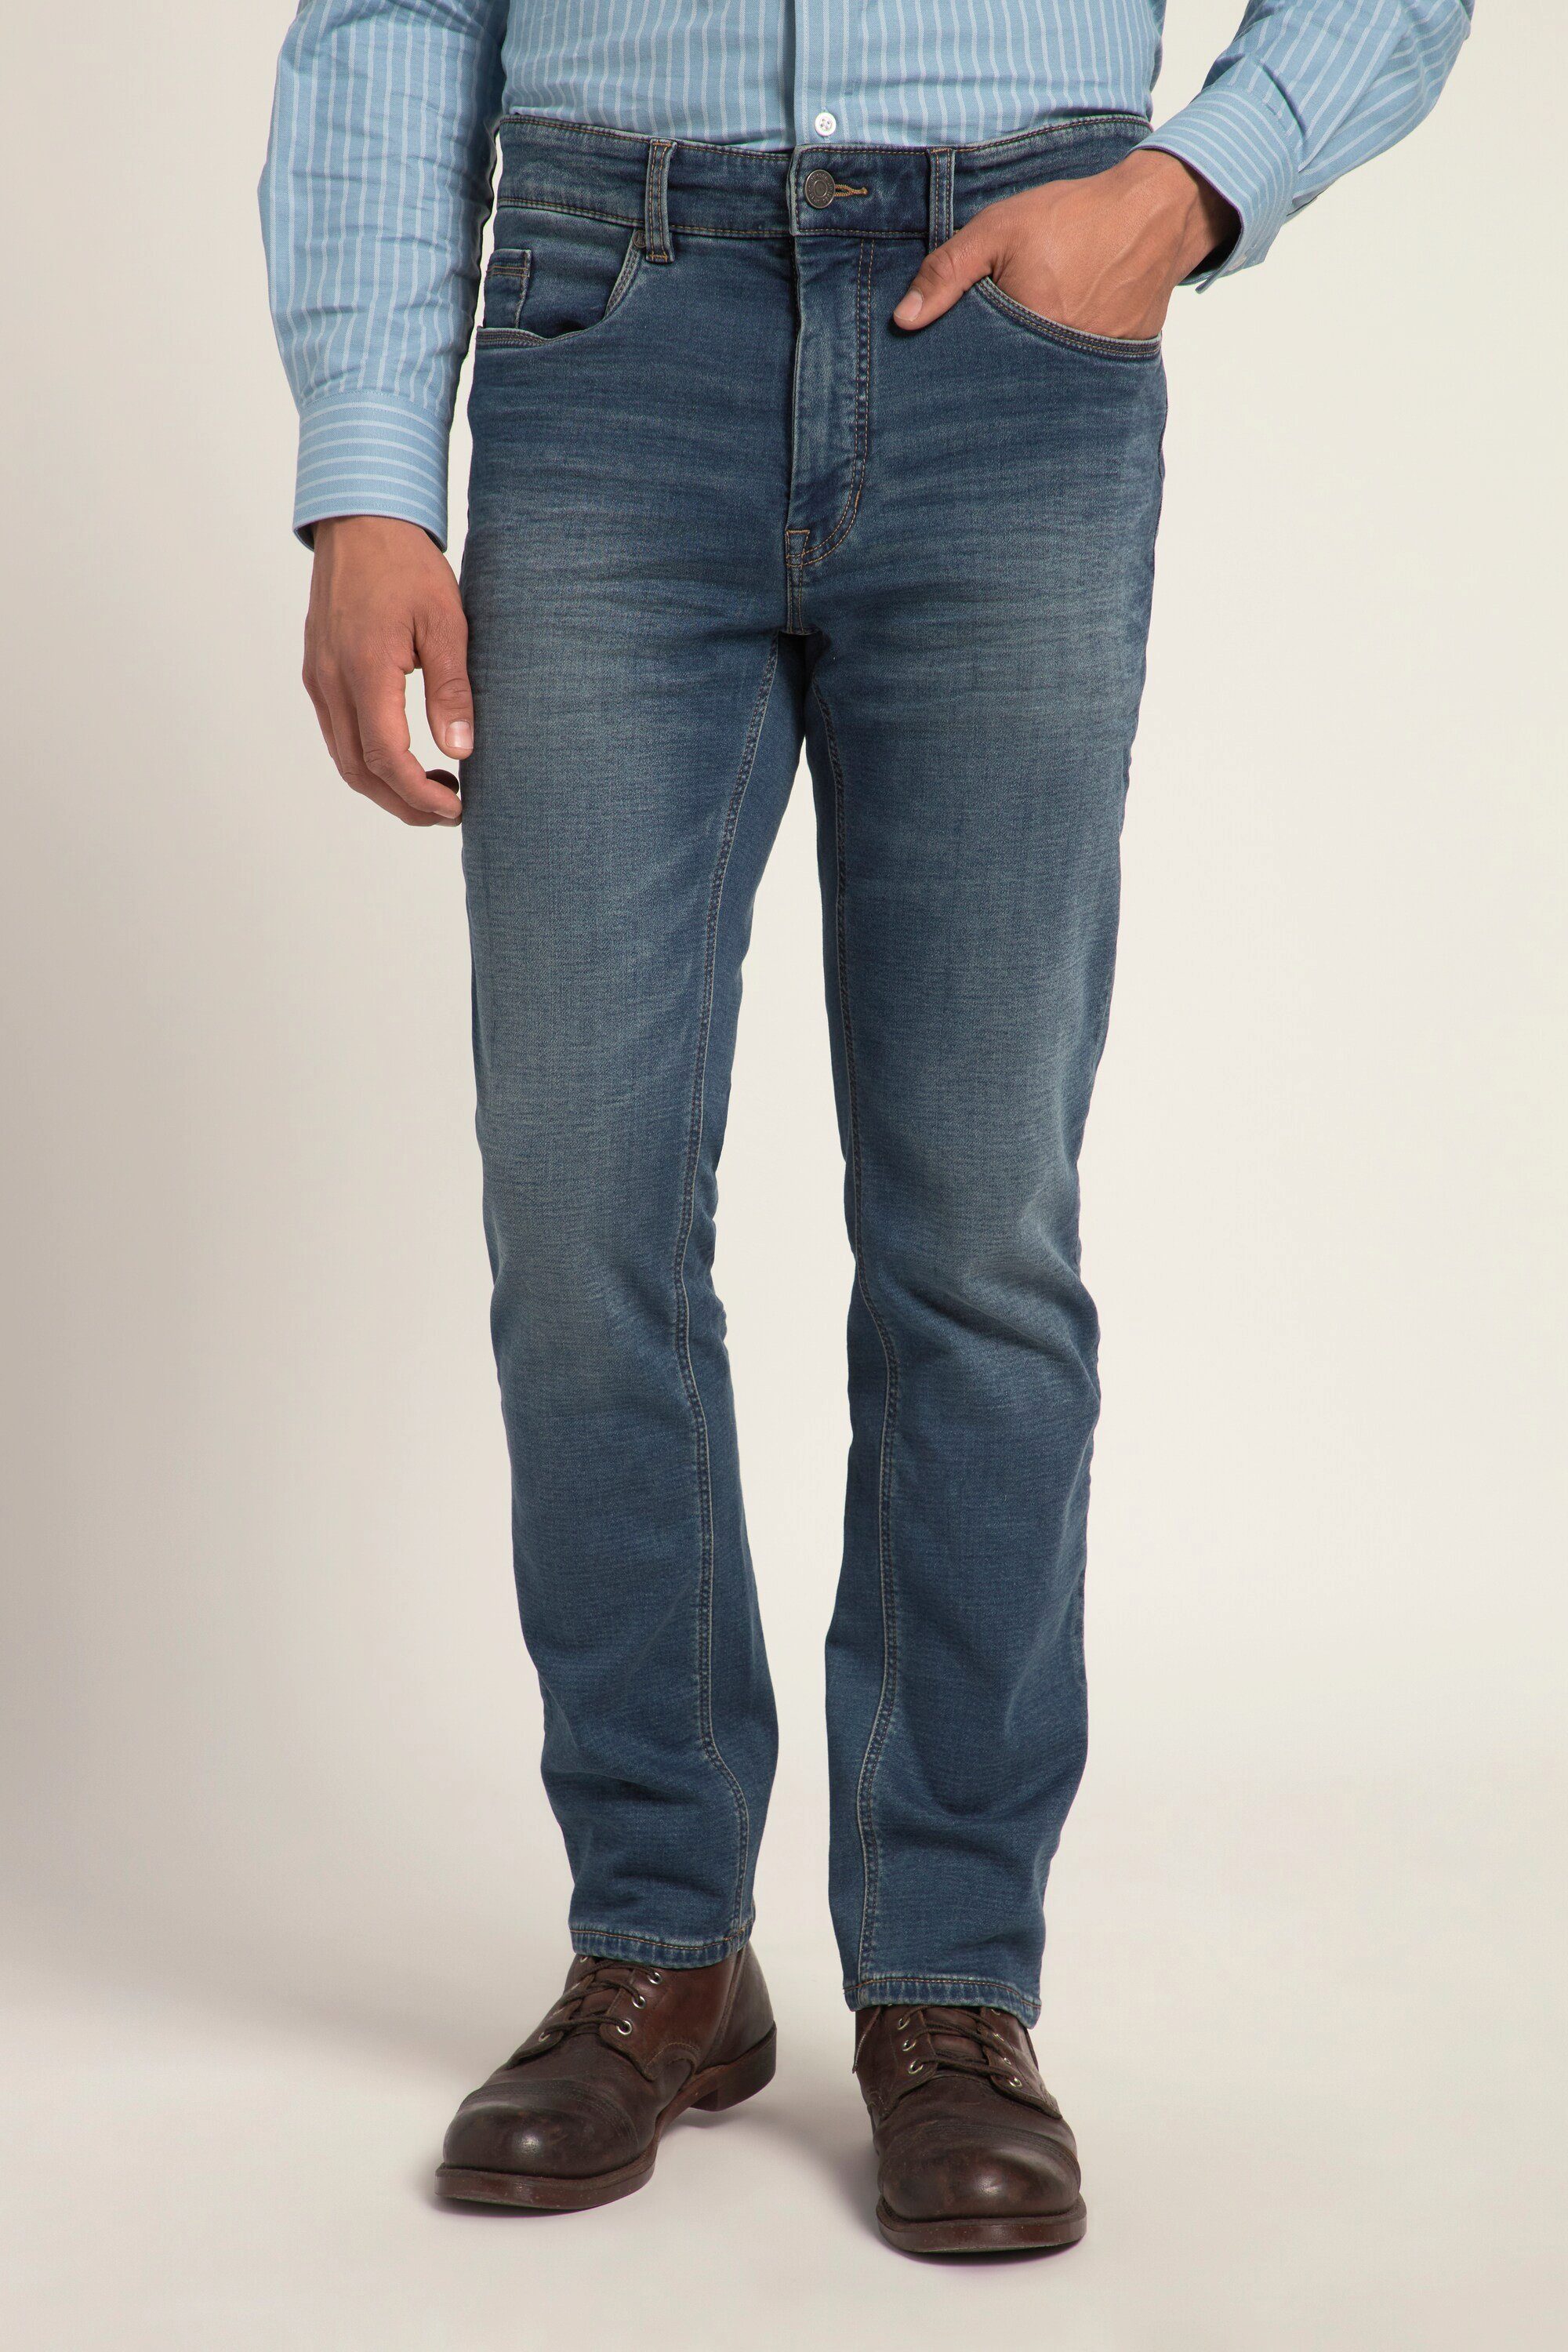 JP1880 Cargohose Straight FLEXNAMIC® Denim blue Jeans 5-Pocket Fit denim